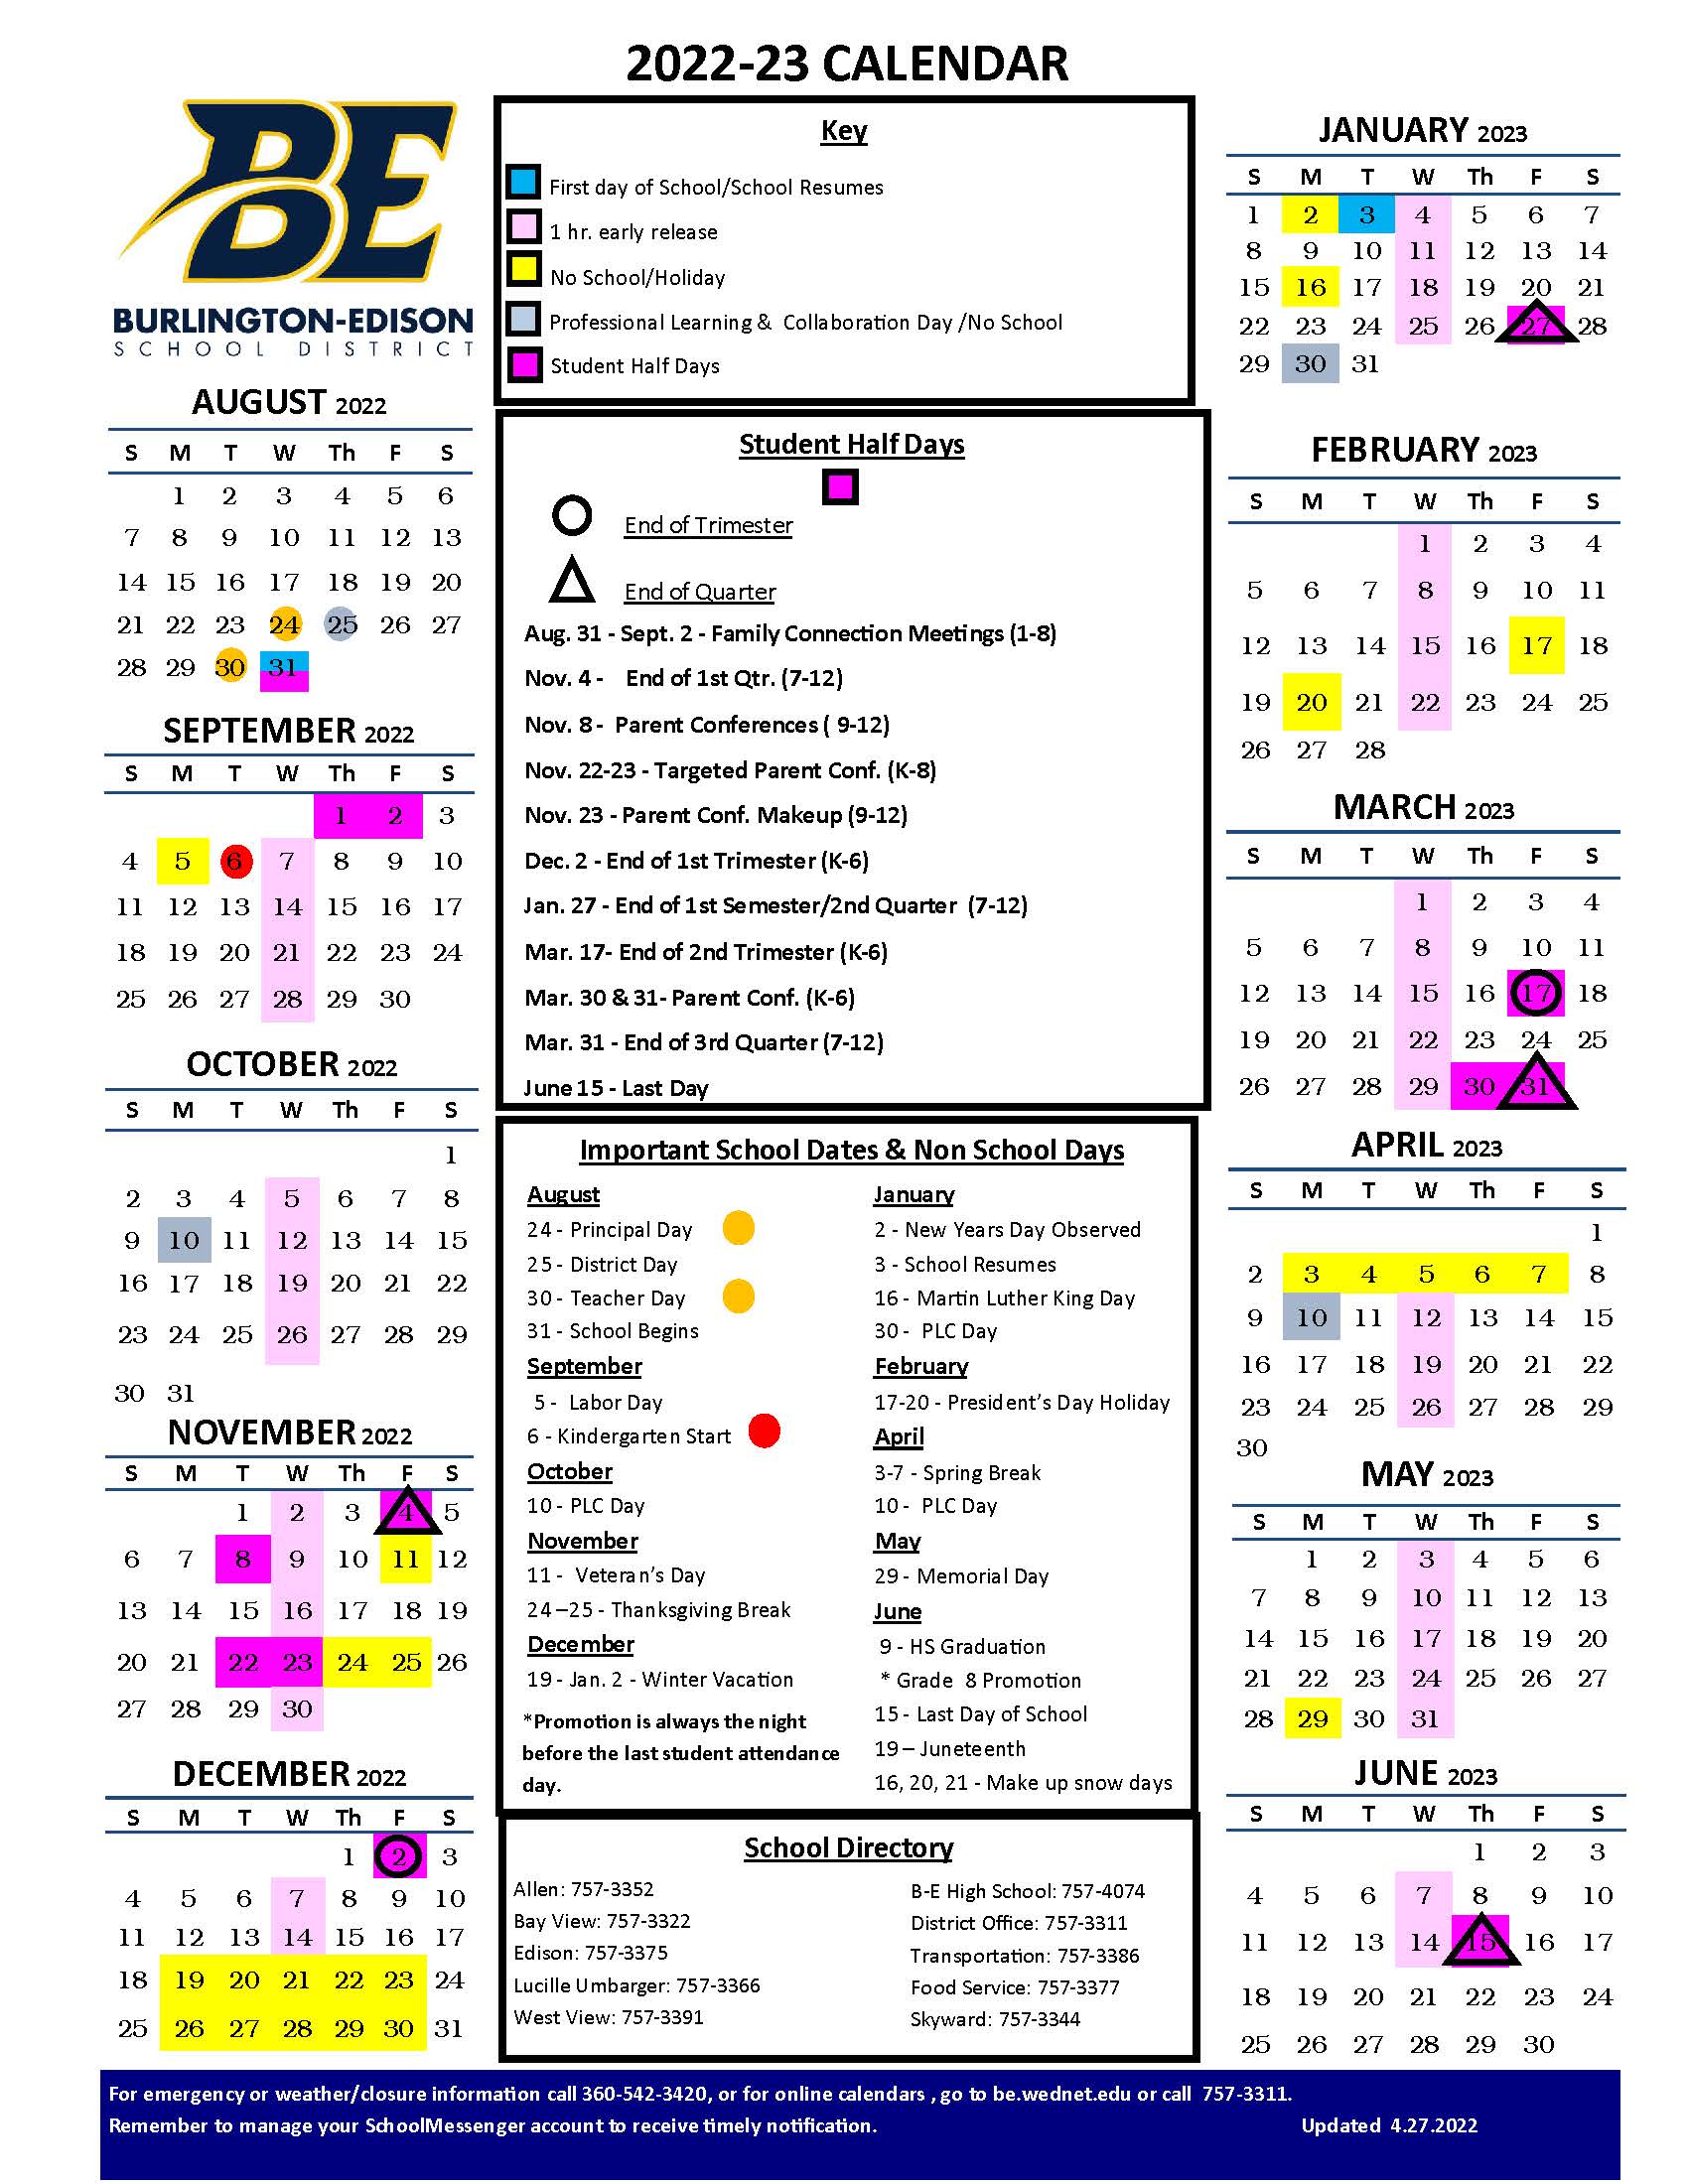 2022-23 Year Long Calendar